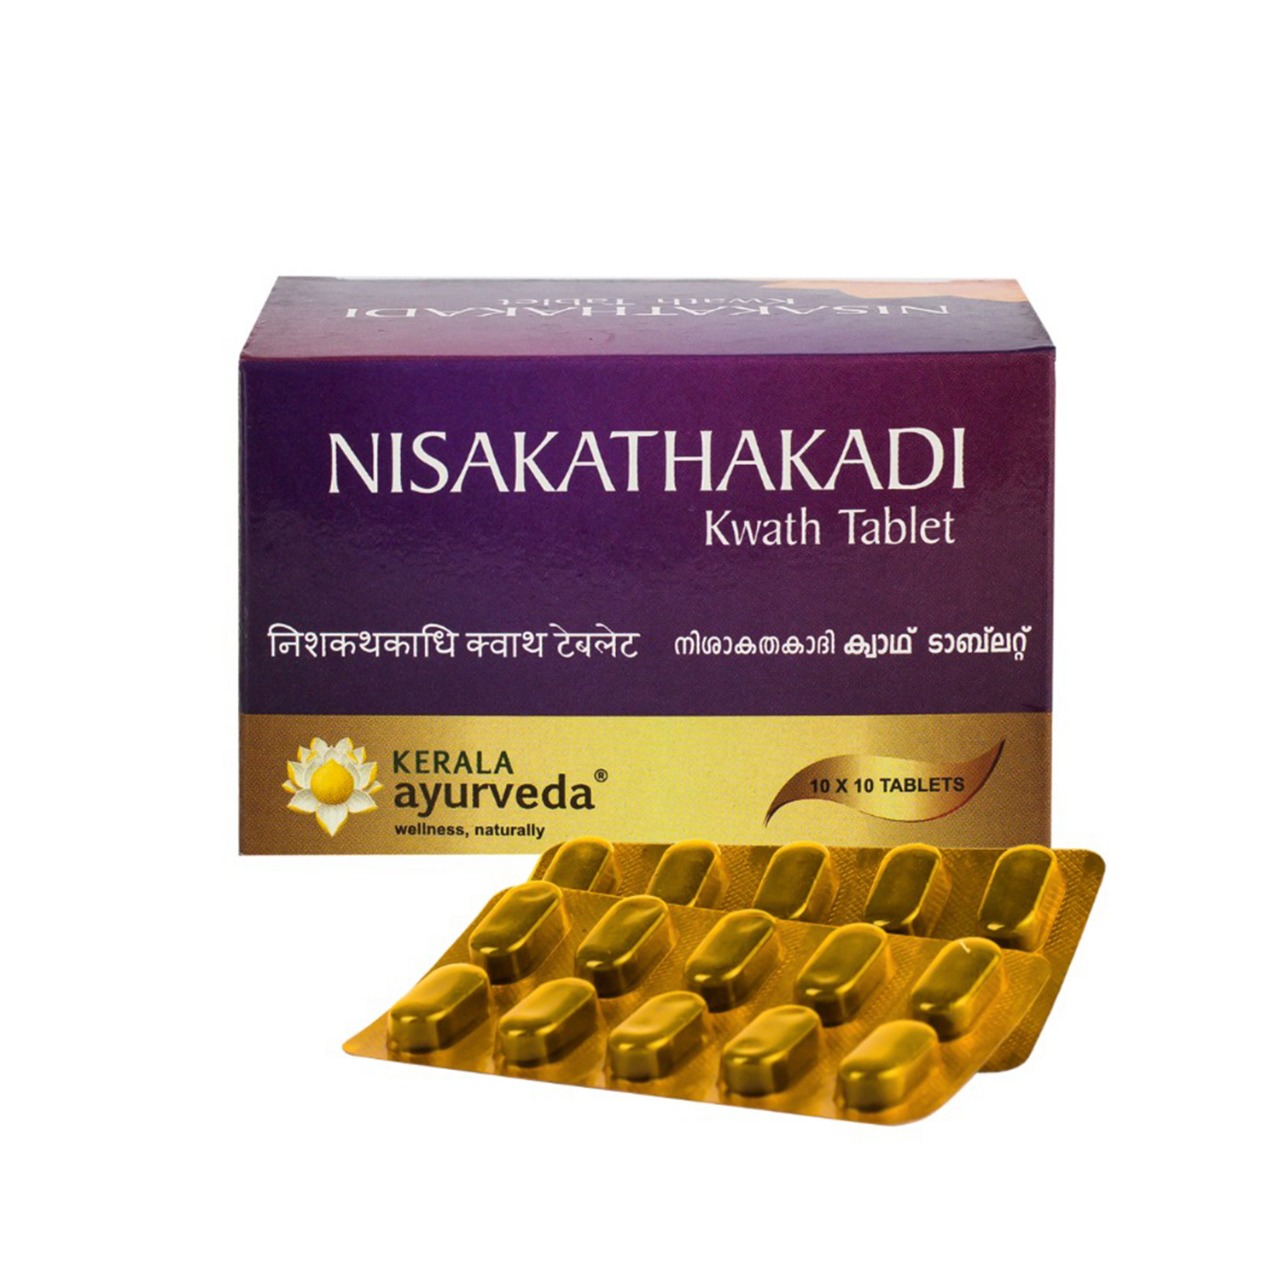 Nisakathakadi Kwath Tablet